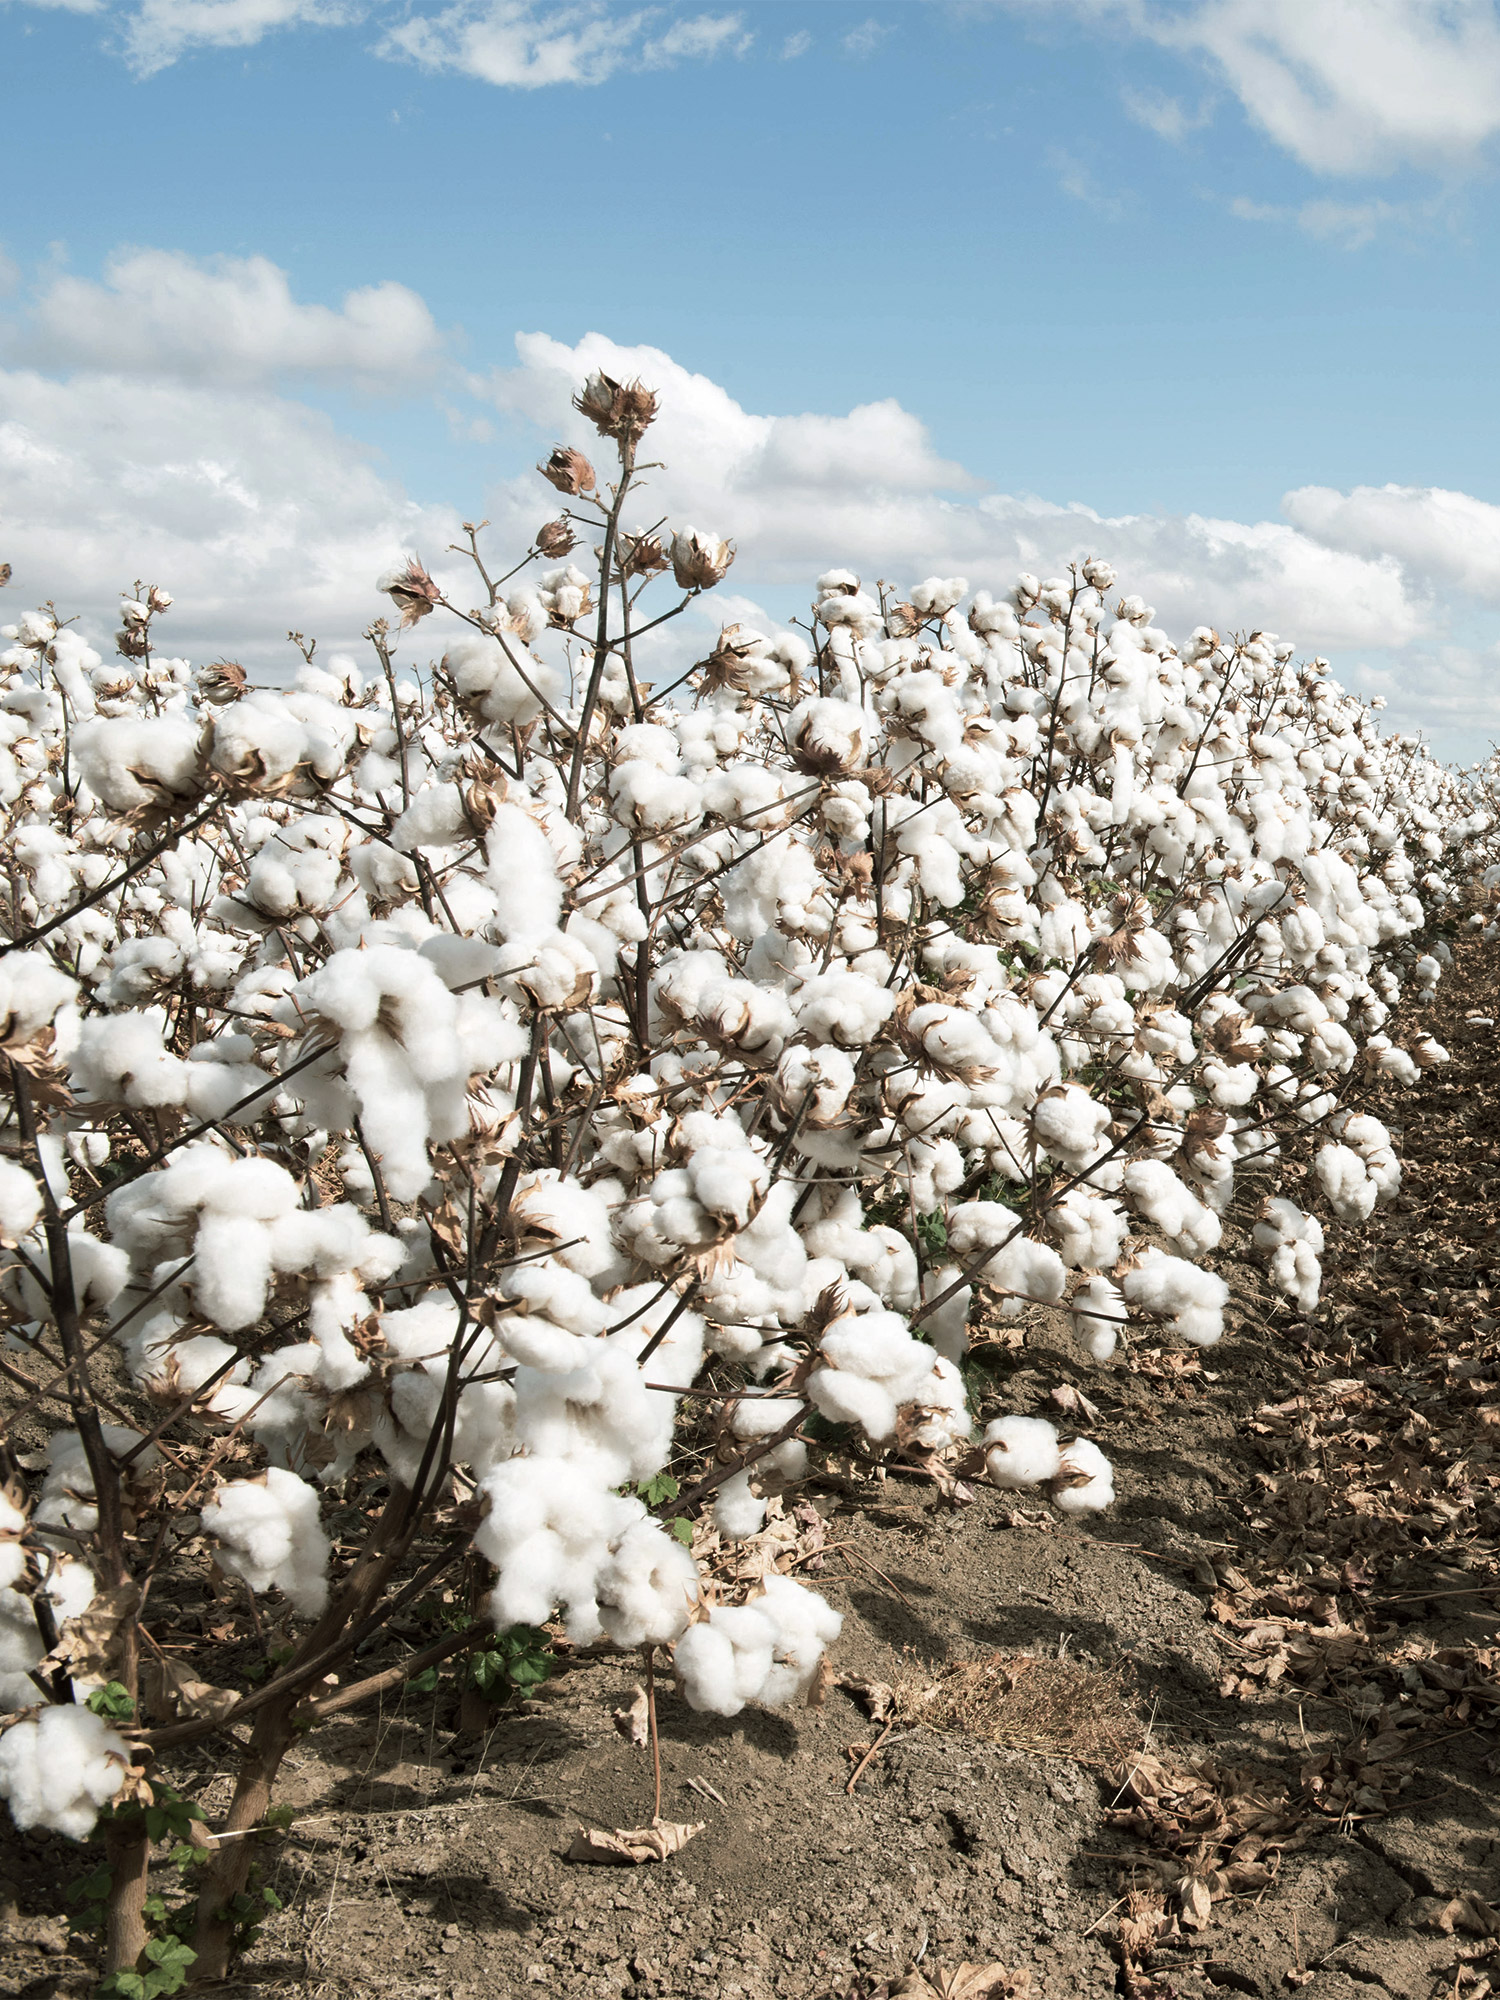 Cotton production v